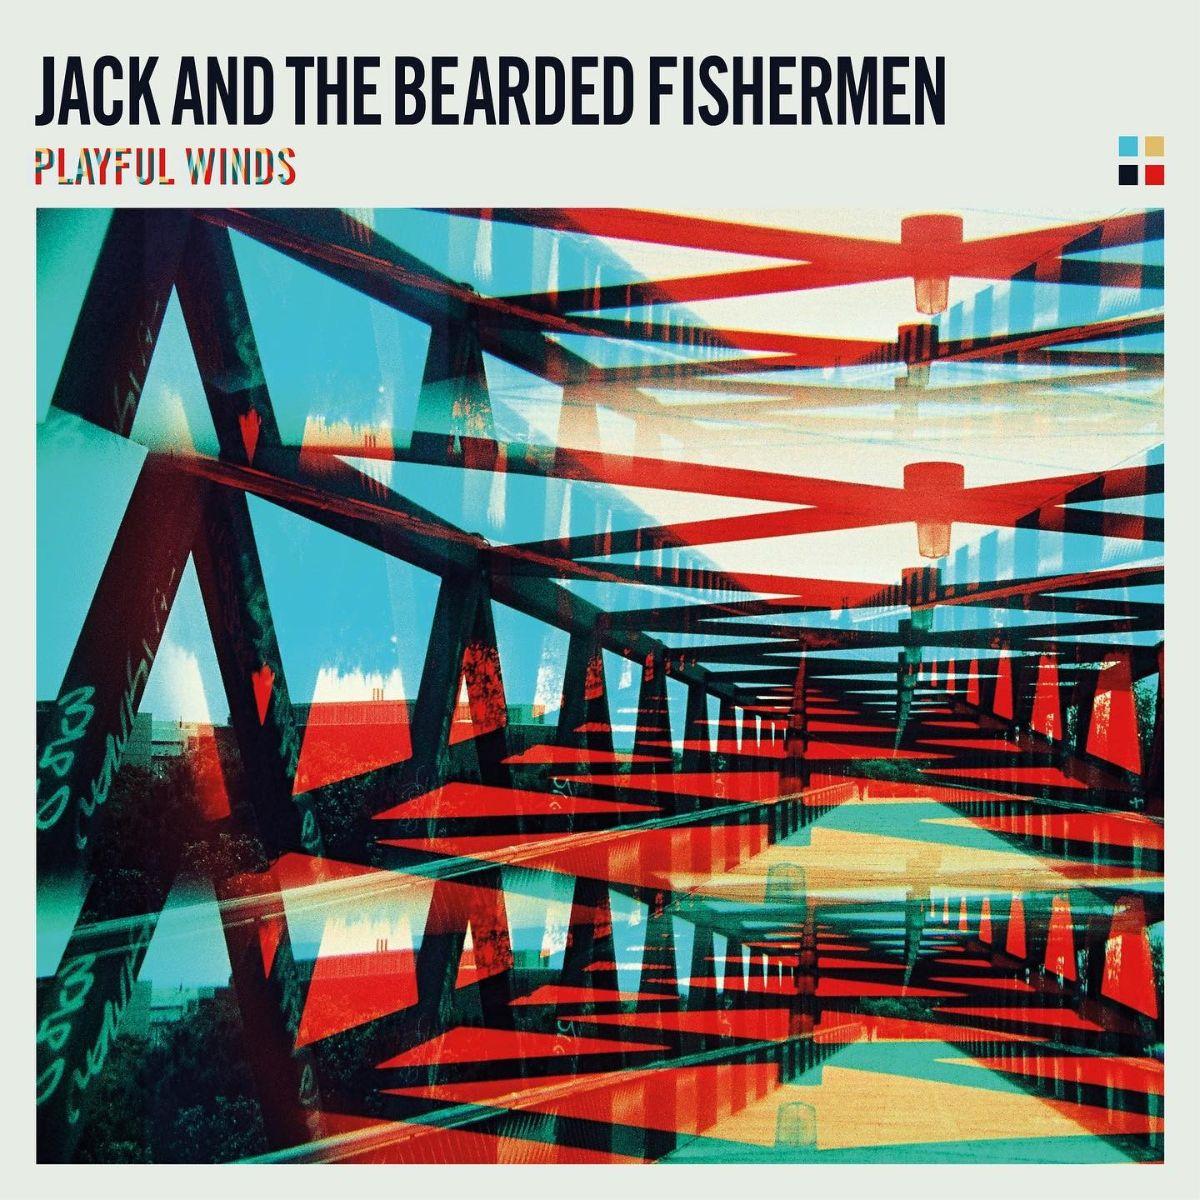 Jack and the bearded fishermen artwork